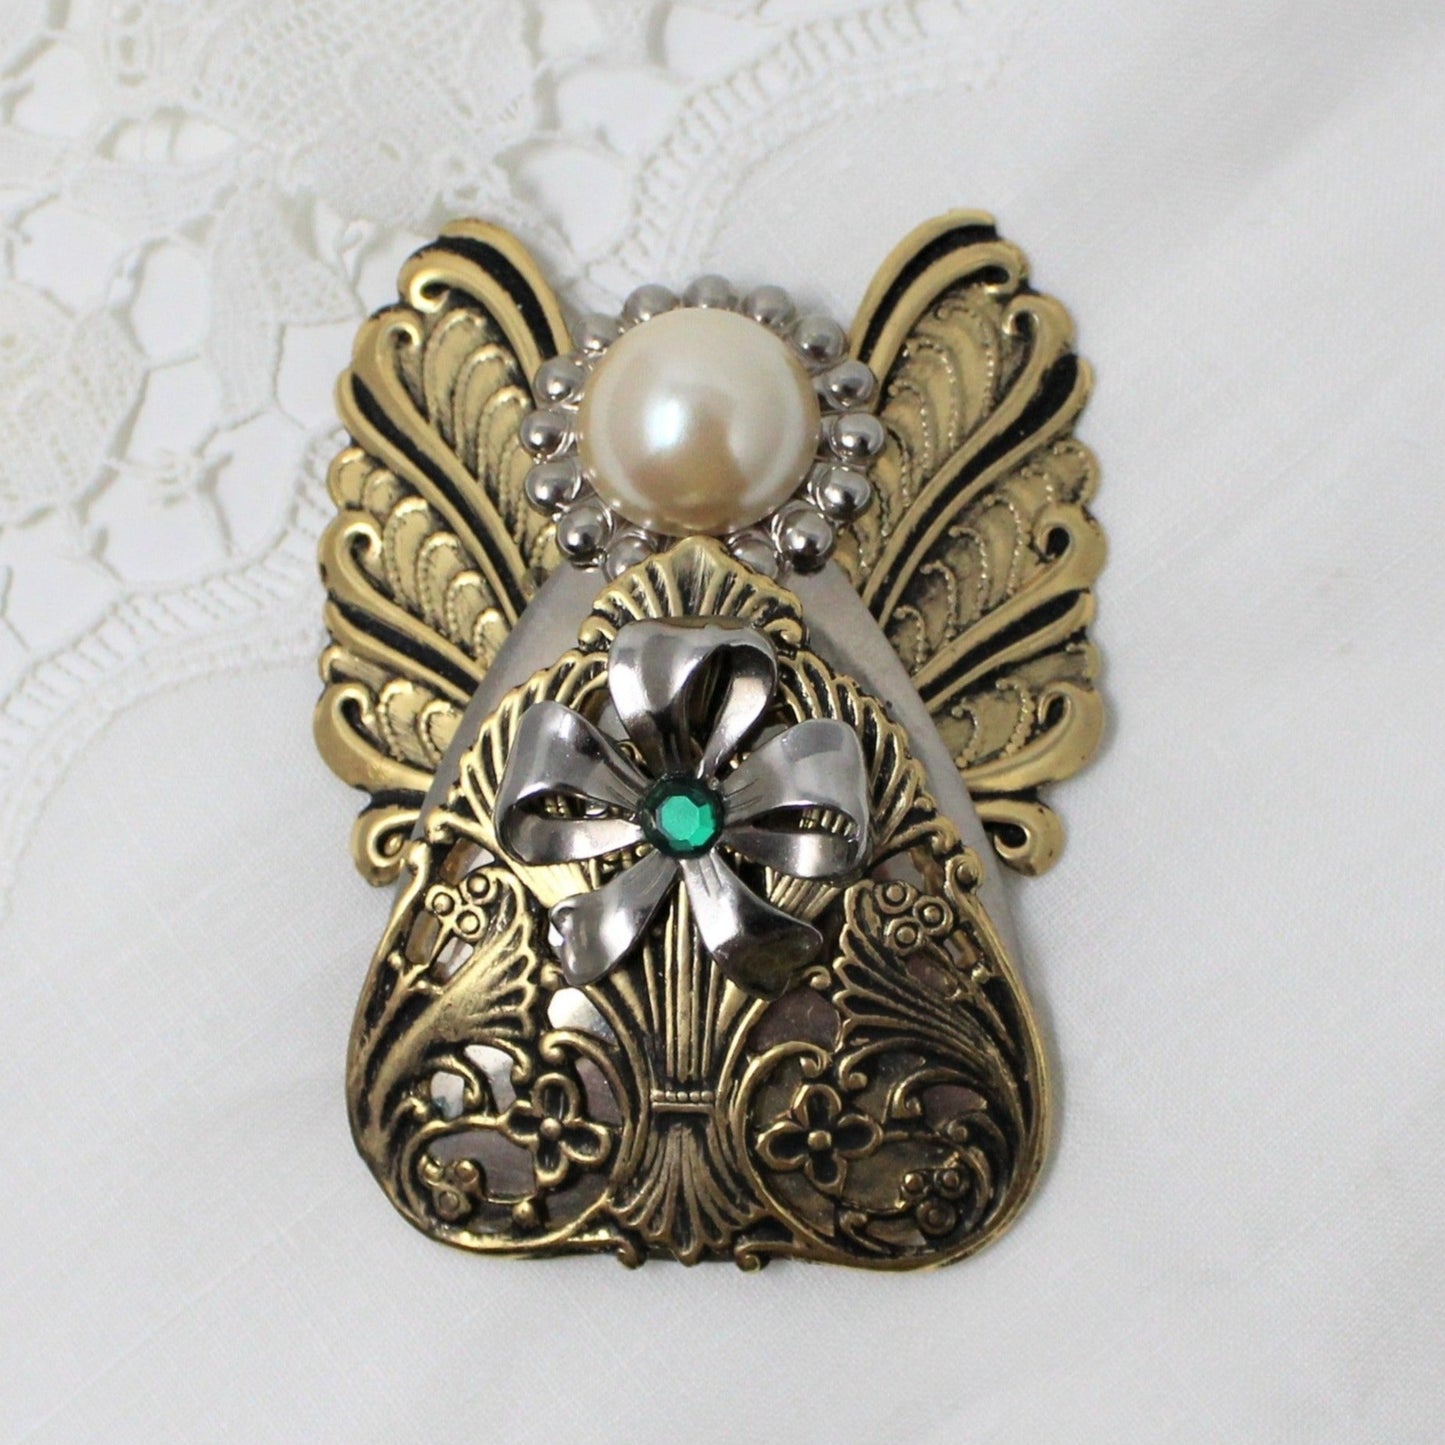 Jane Davis Angel Pin/Brooch. Silver & Gold with Green Rhinestone center, Vintage